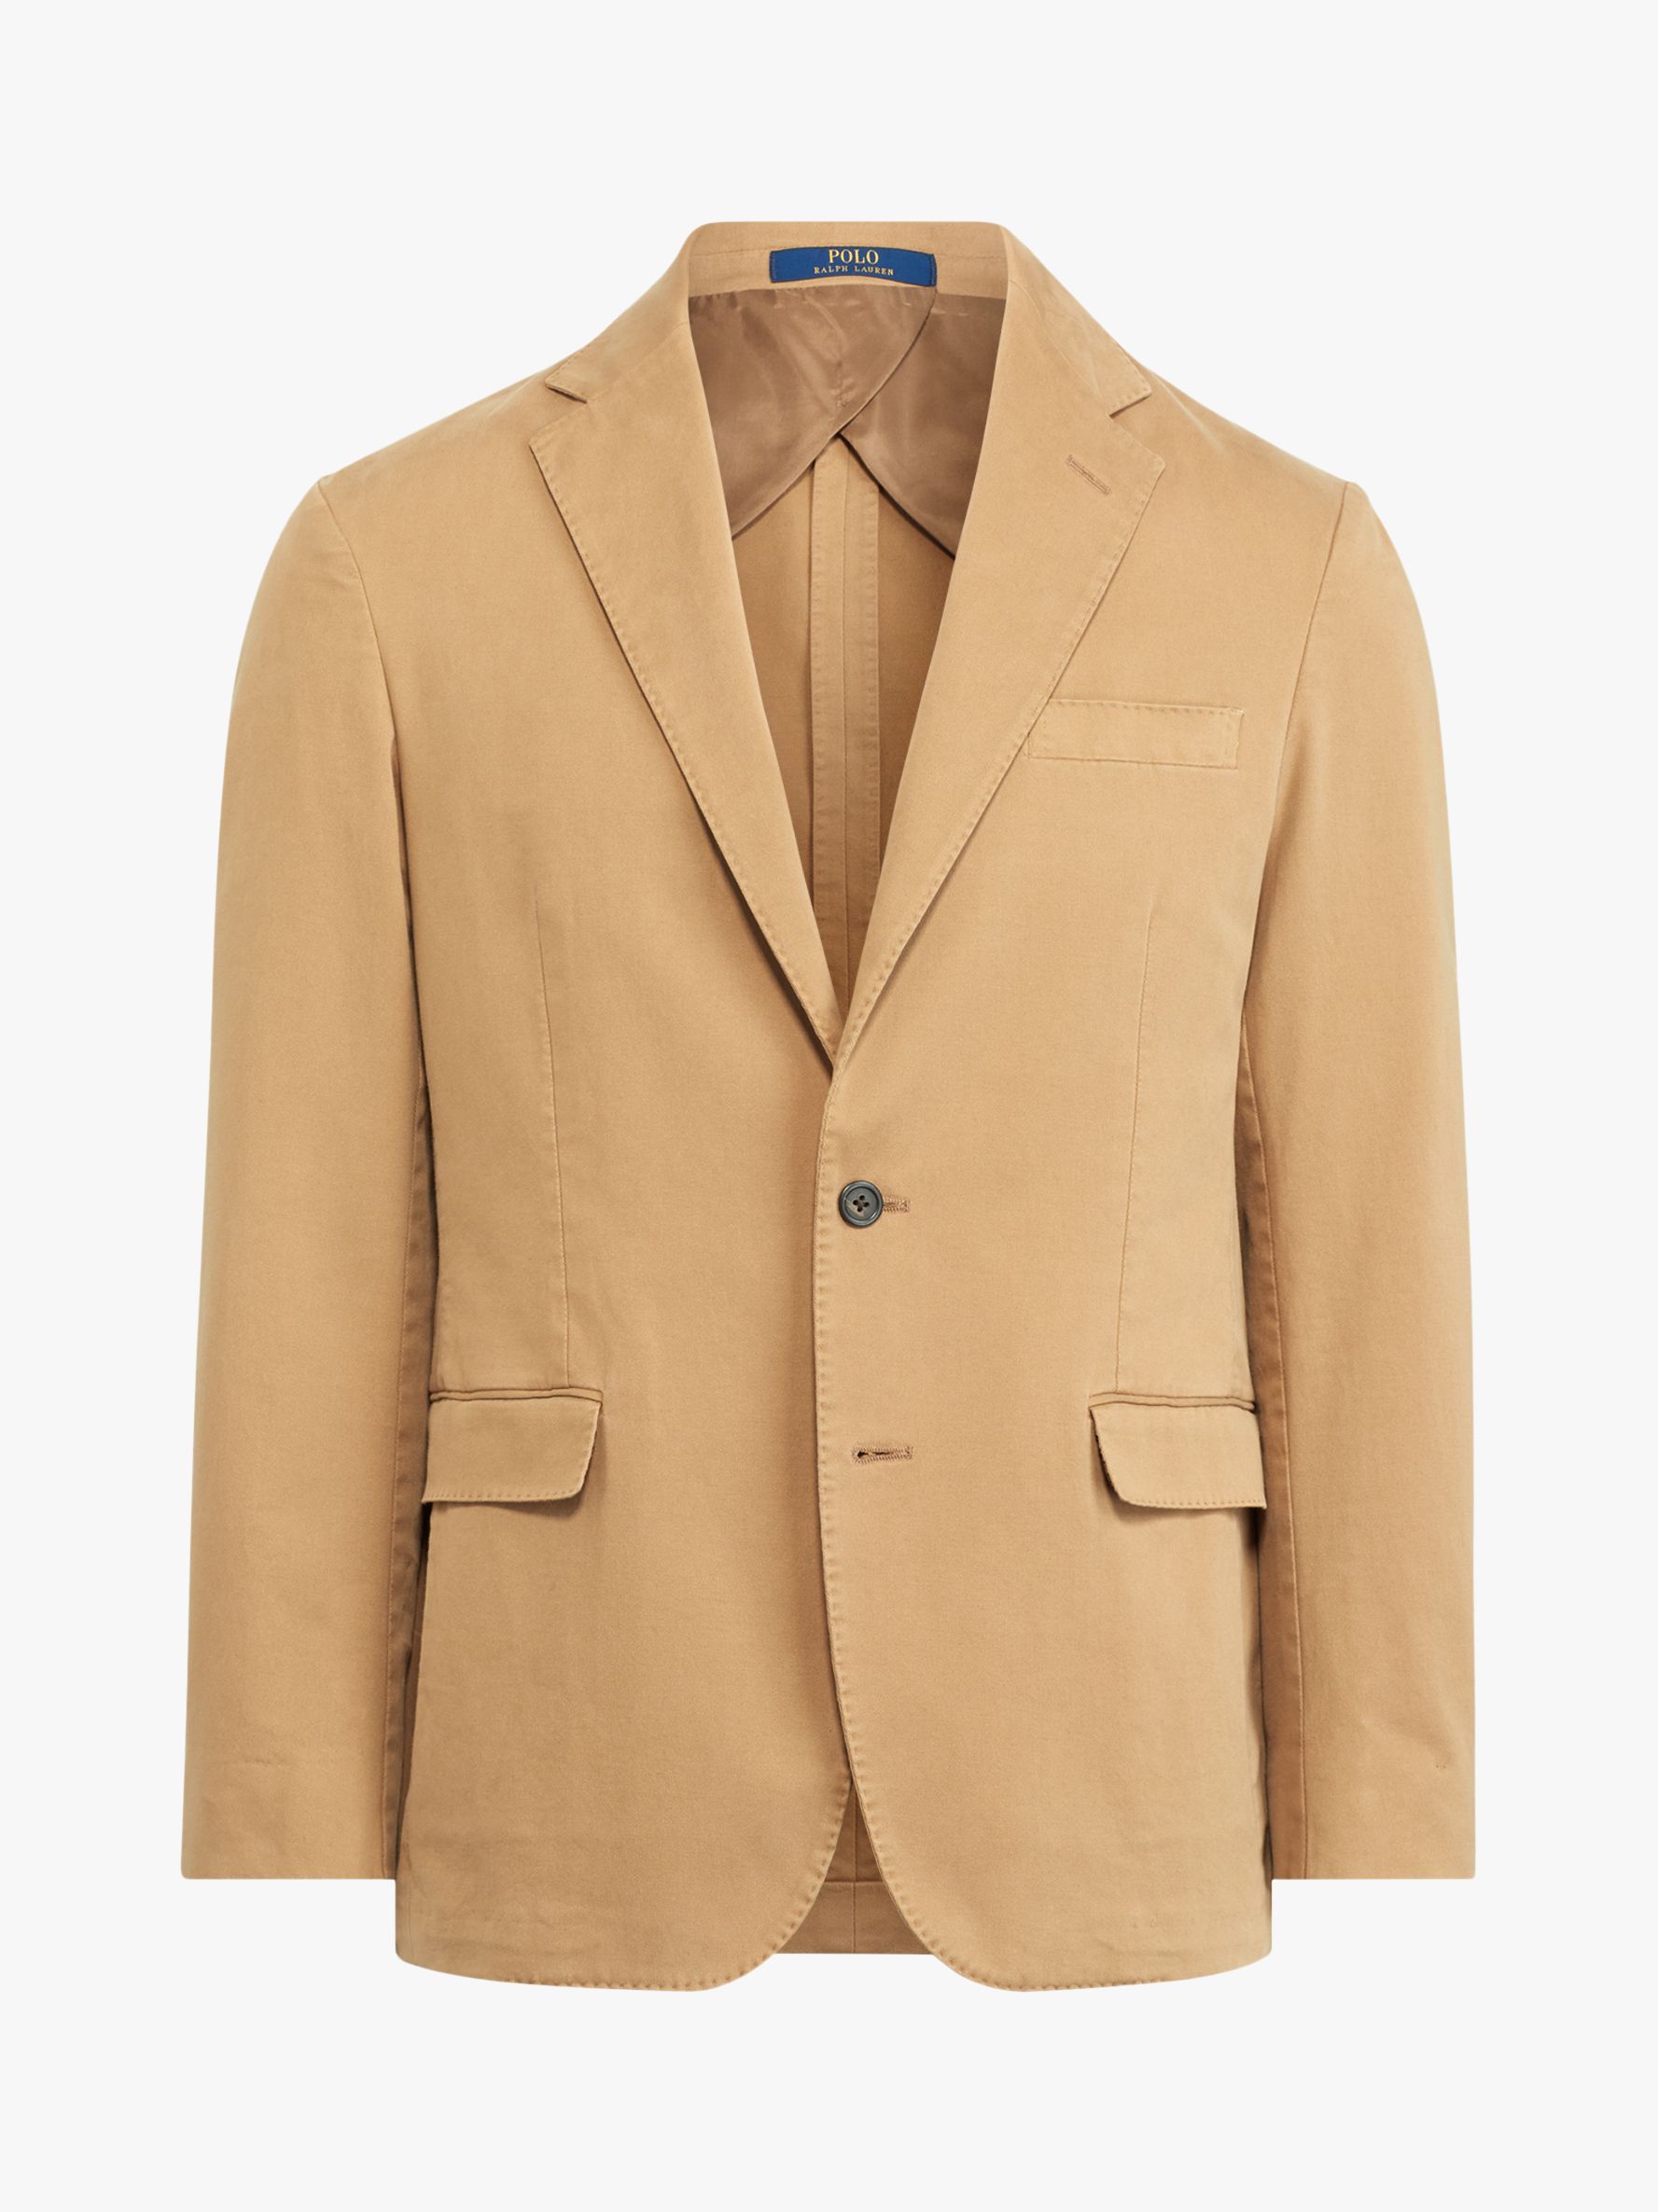 polo ralph lauren suit jacket